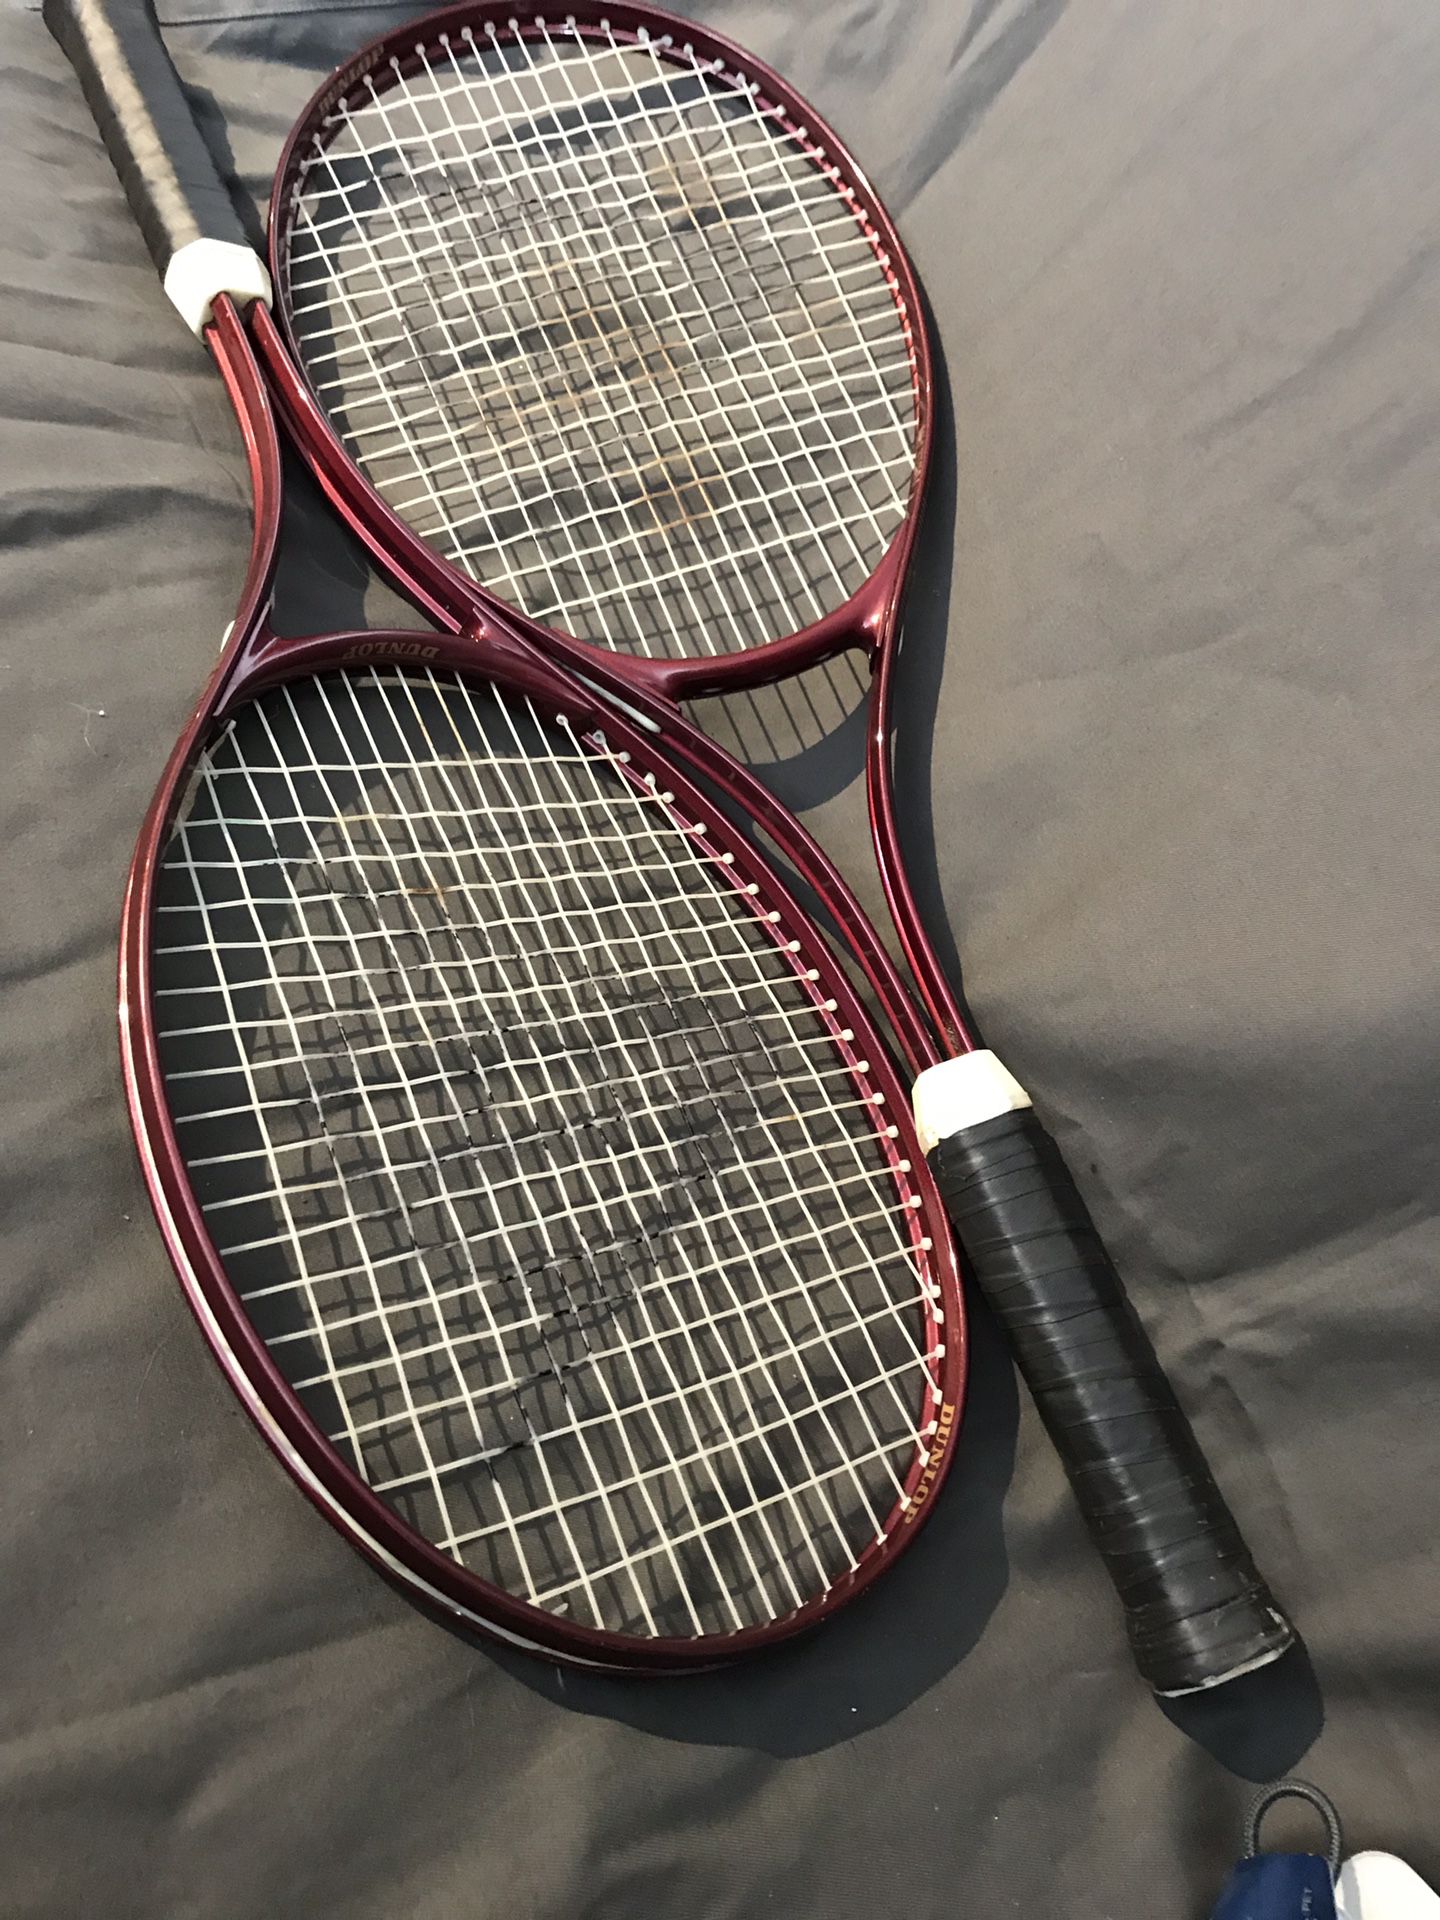 Prince tennis bag, 2 Dunlap tennis rackets, 2 racket covers